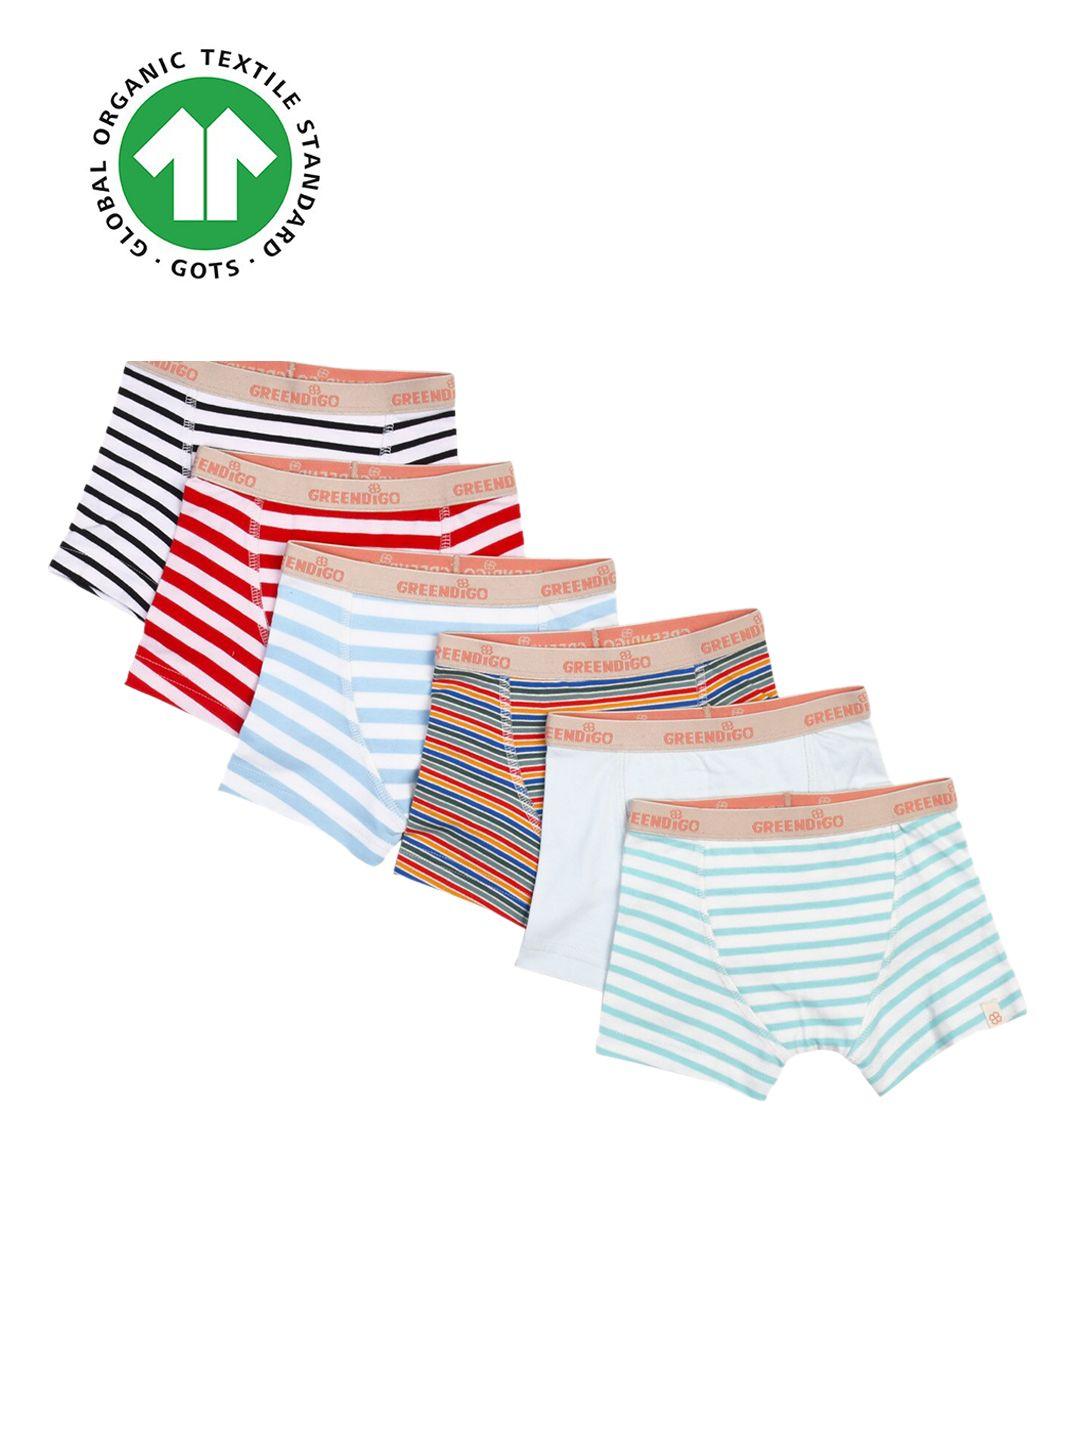 greendigo boys pack of 6 striped organic cotton boy shorts